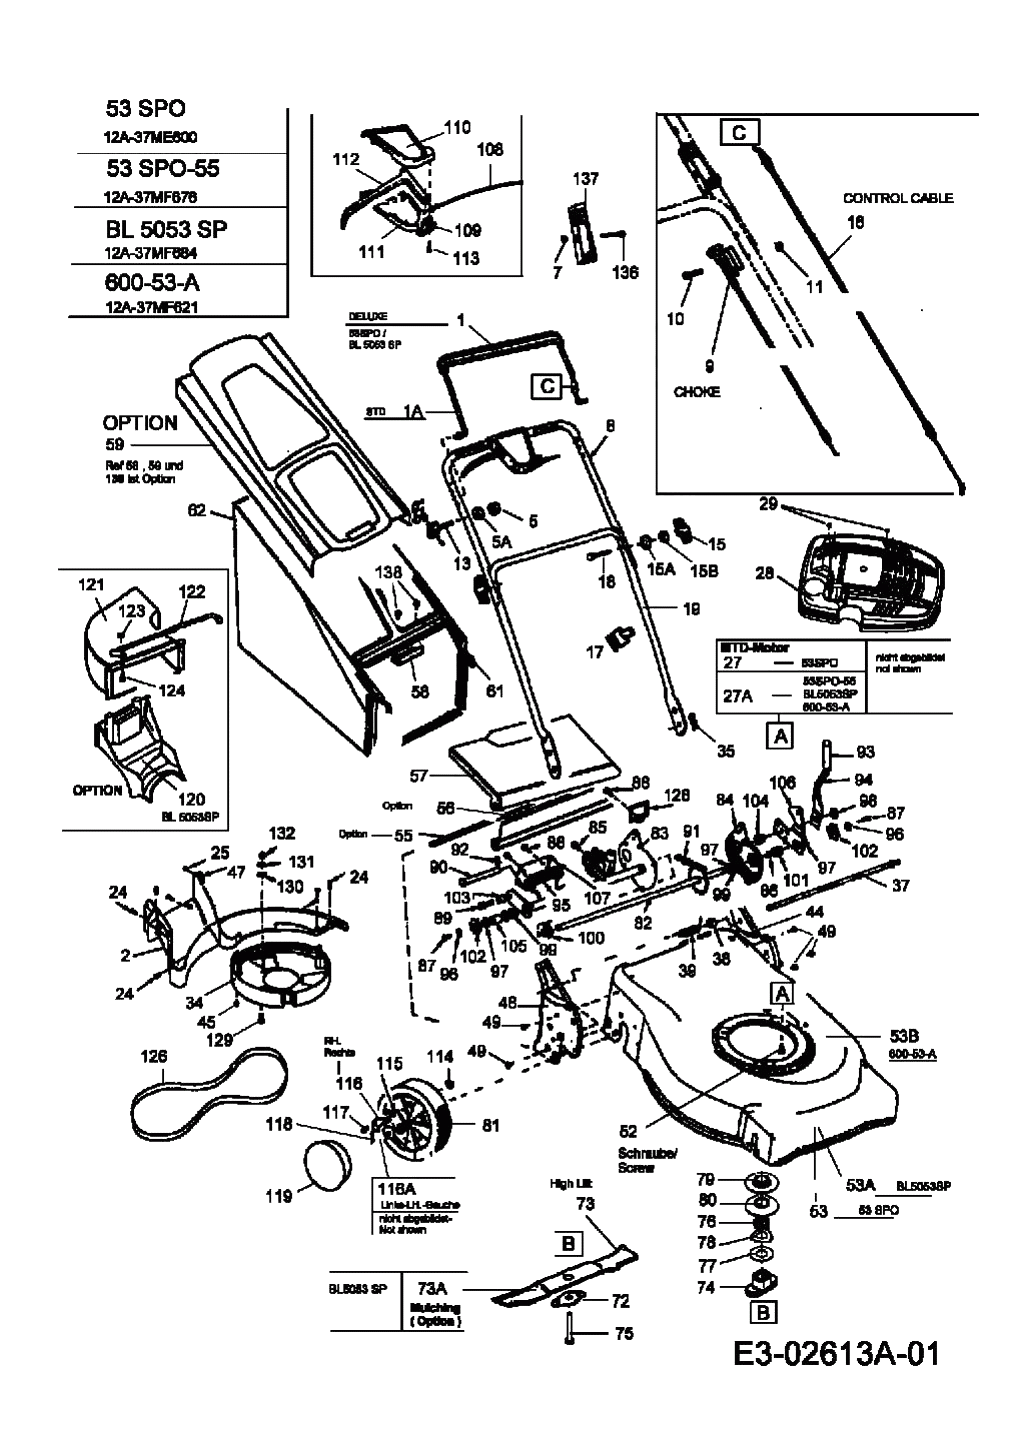 MTD Артикул 12A-37ME600 (год выпуска 2006). Основная деталировка